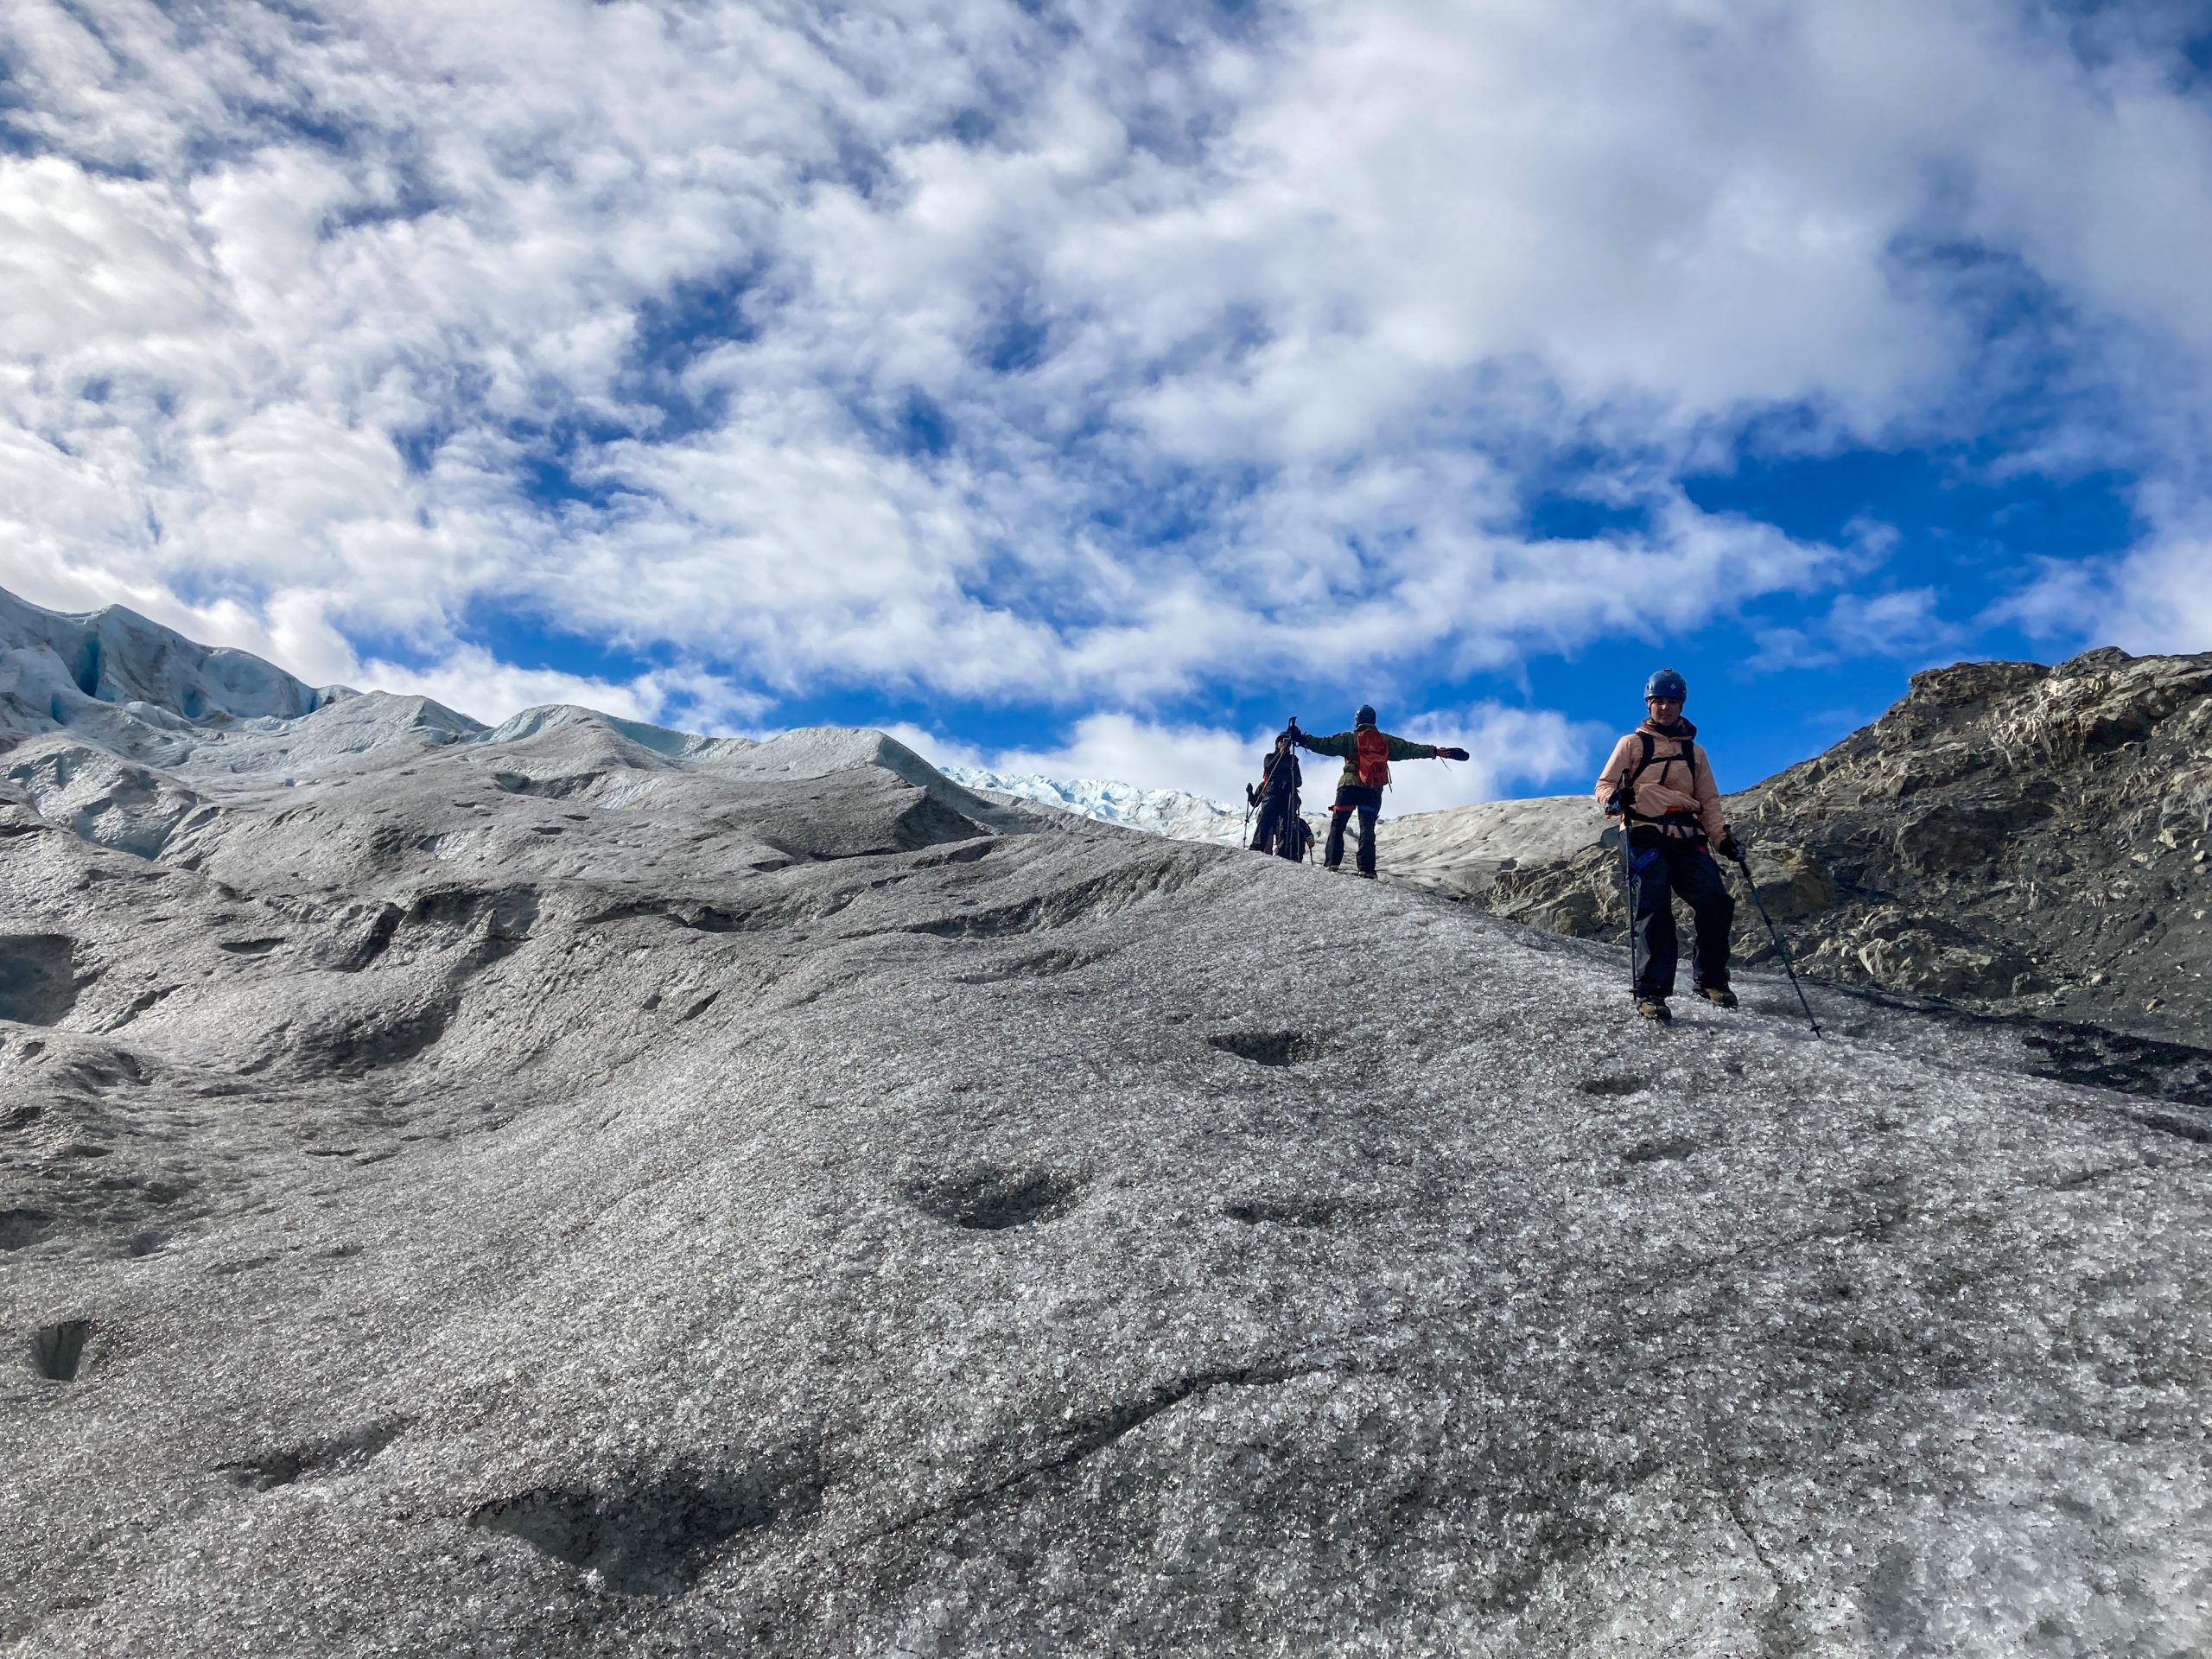 TRIP REPORT: 9/14/22 Exit Glacier Ice Hiking Adventure